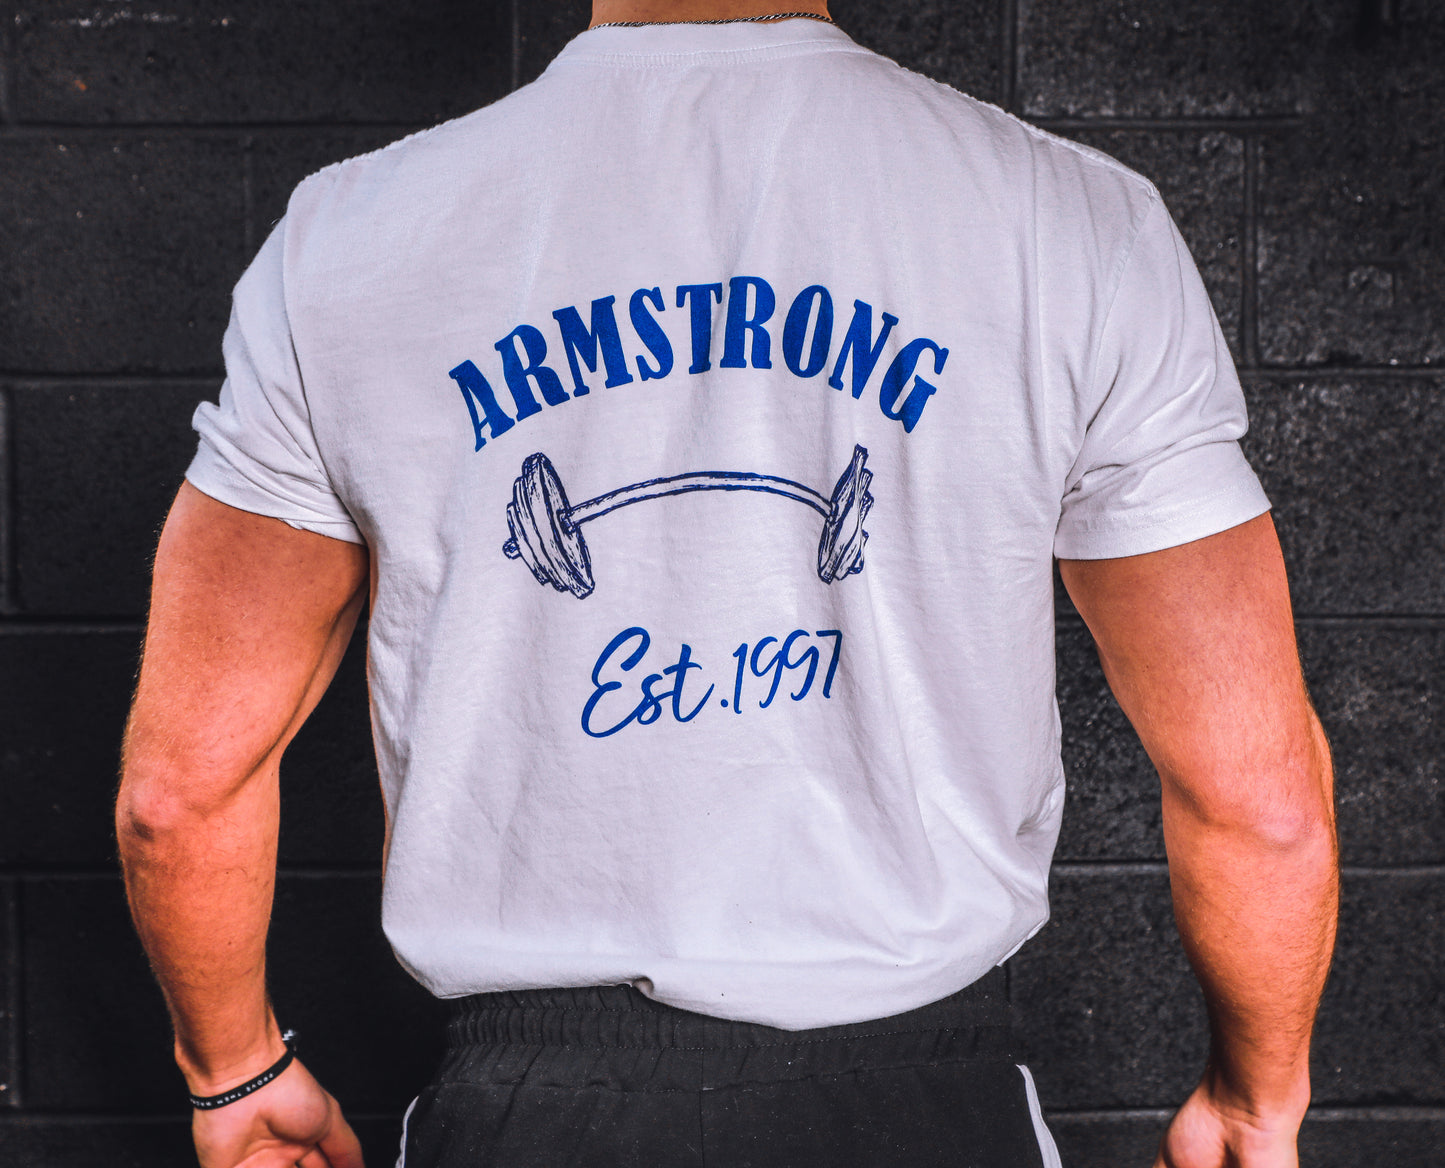 Armstrong T-Shirt